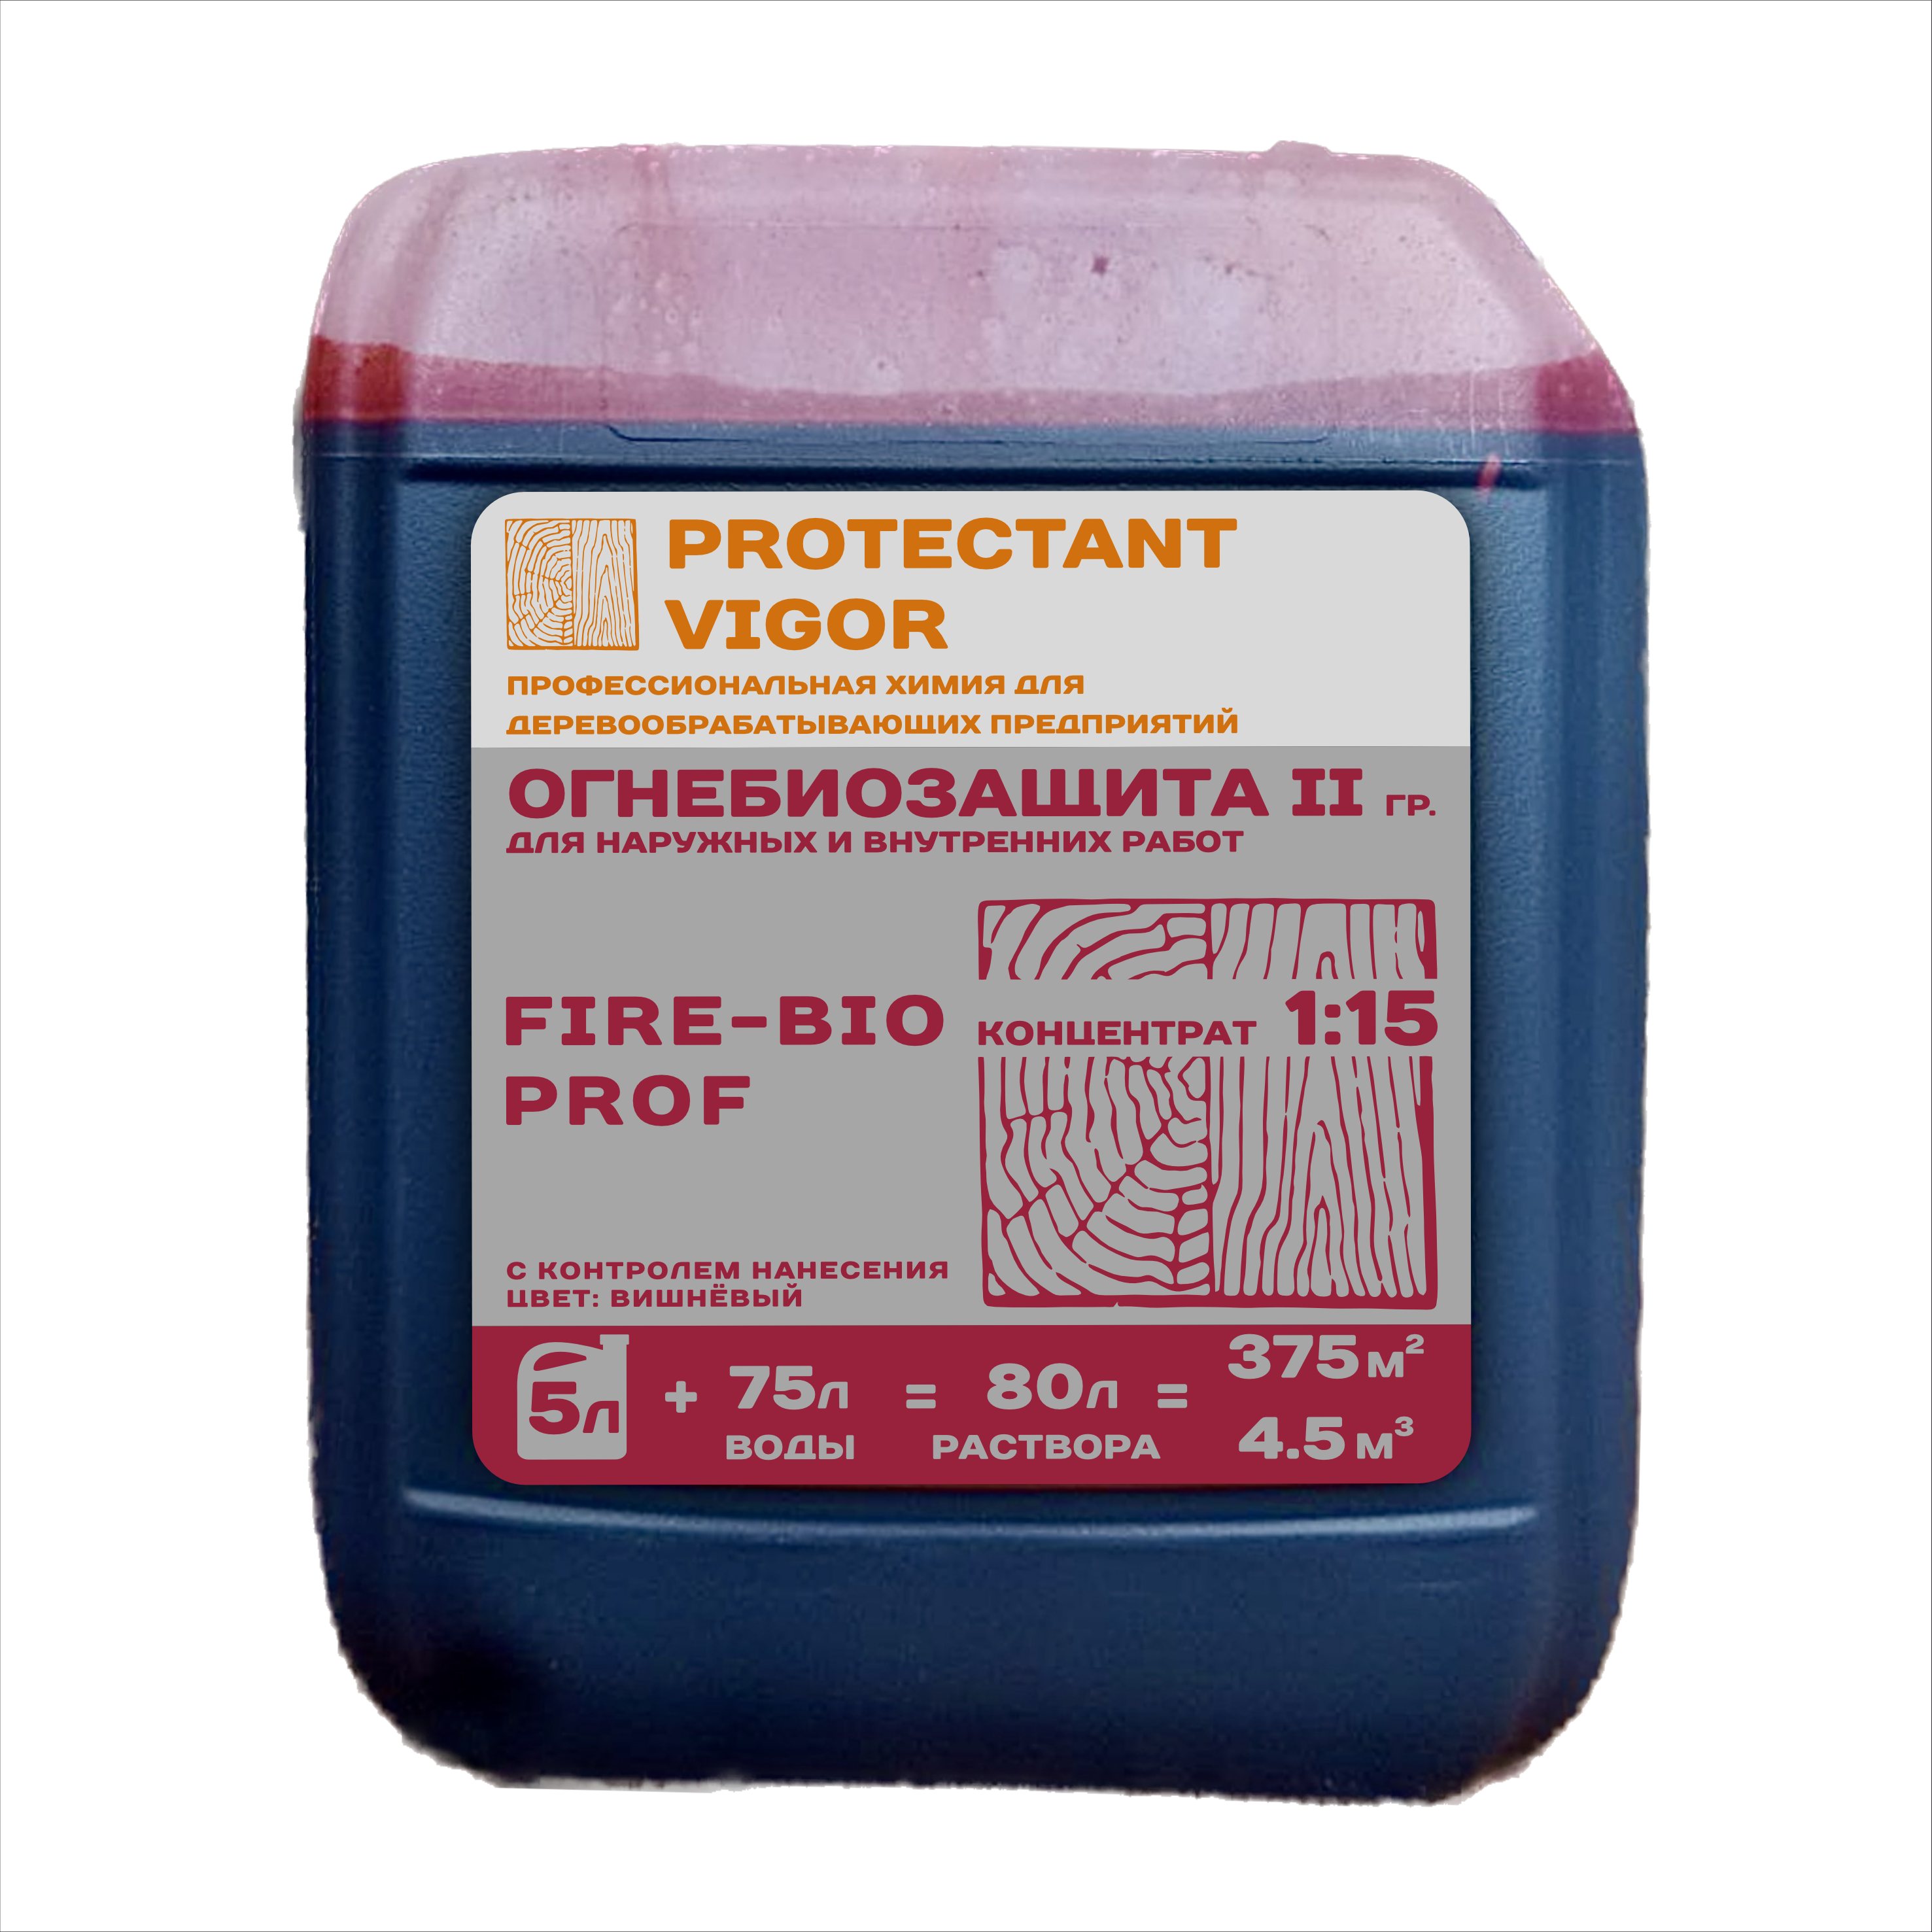 Огнебиозащита Концентрат 1:15 Protectant Vigor Fire Bio SUPER PROF - фотография № 3